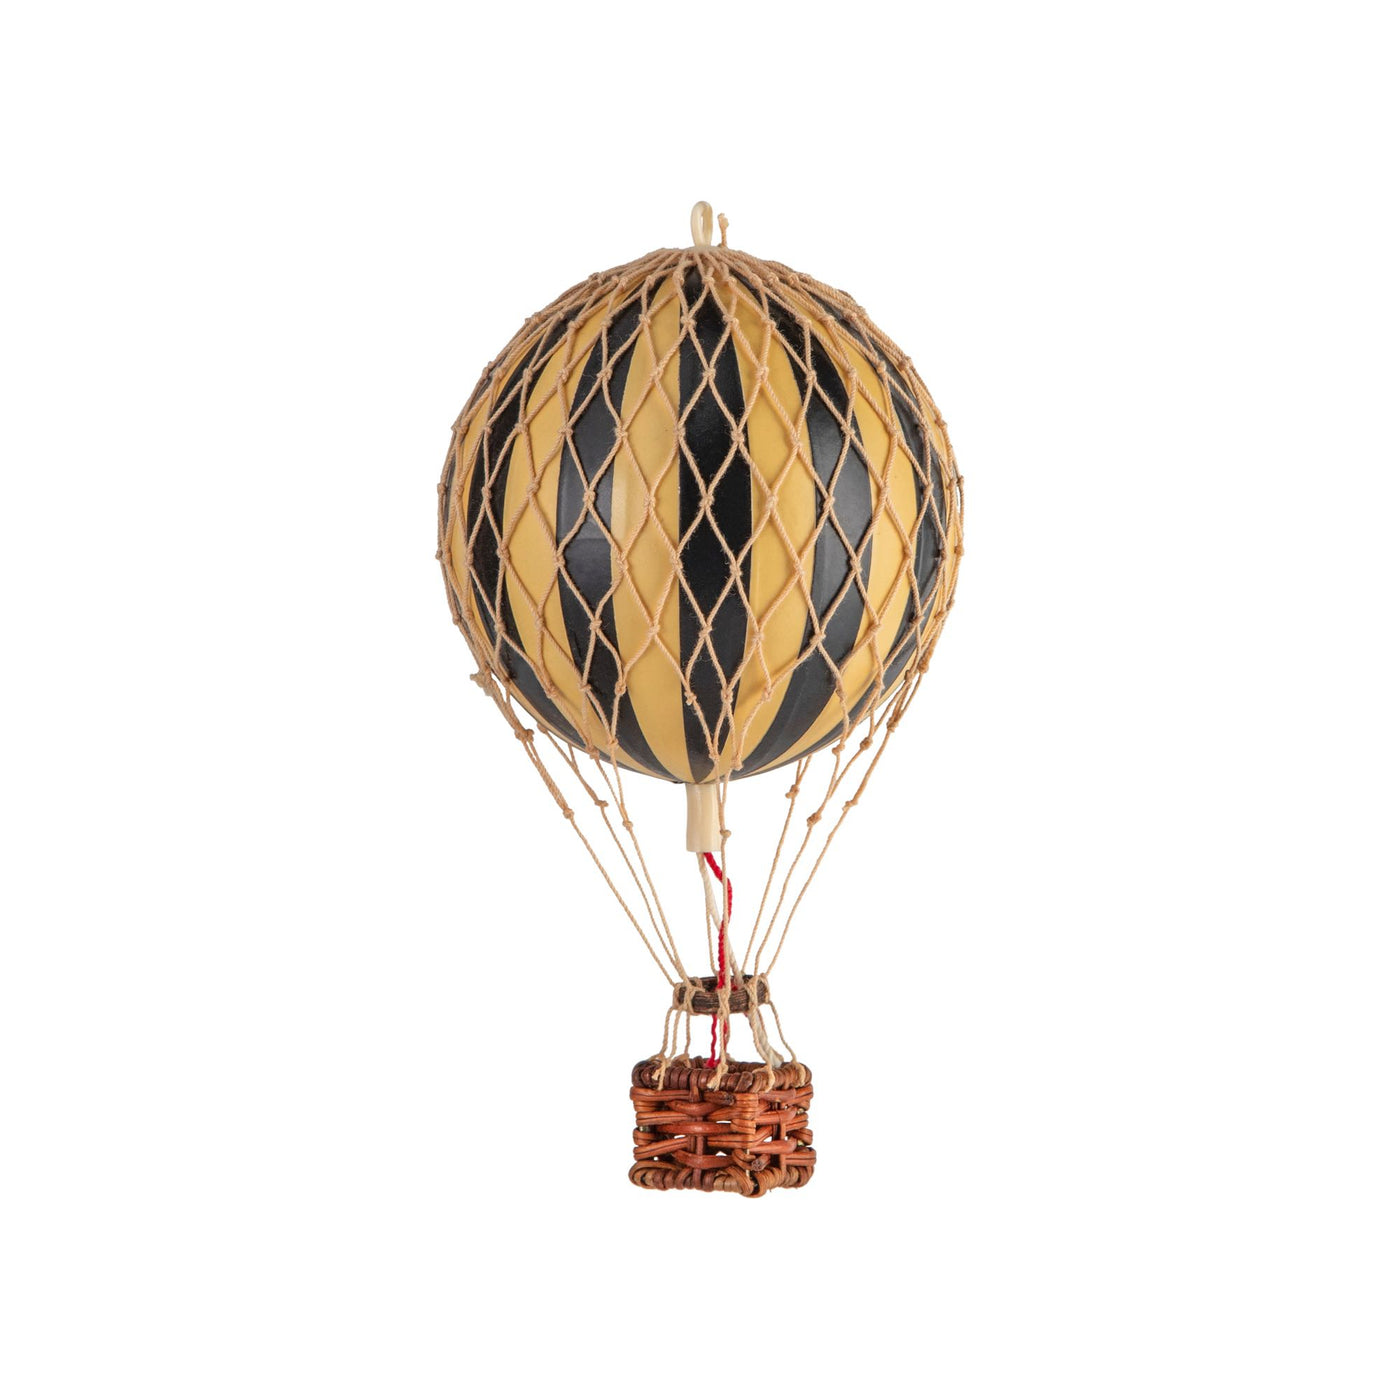 Luftballon Black, 8,5 cm. Floating The Skies, Authentic Models